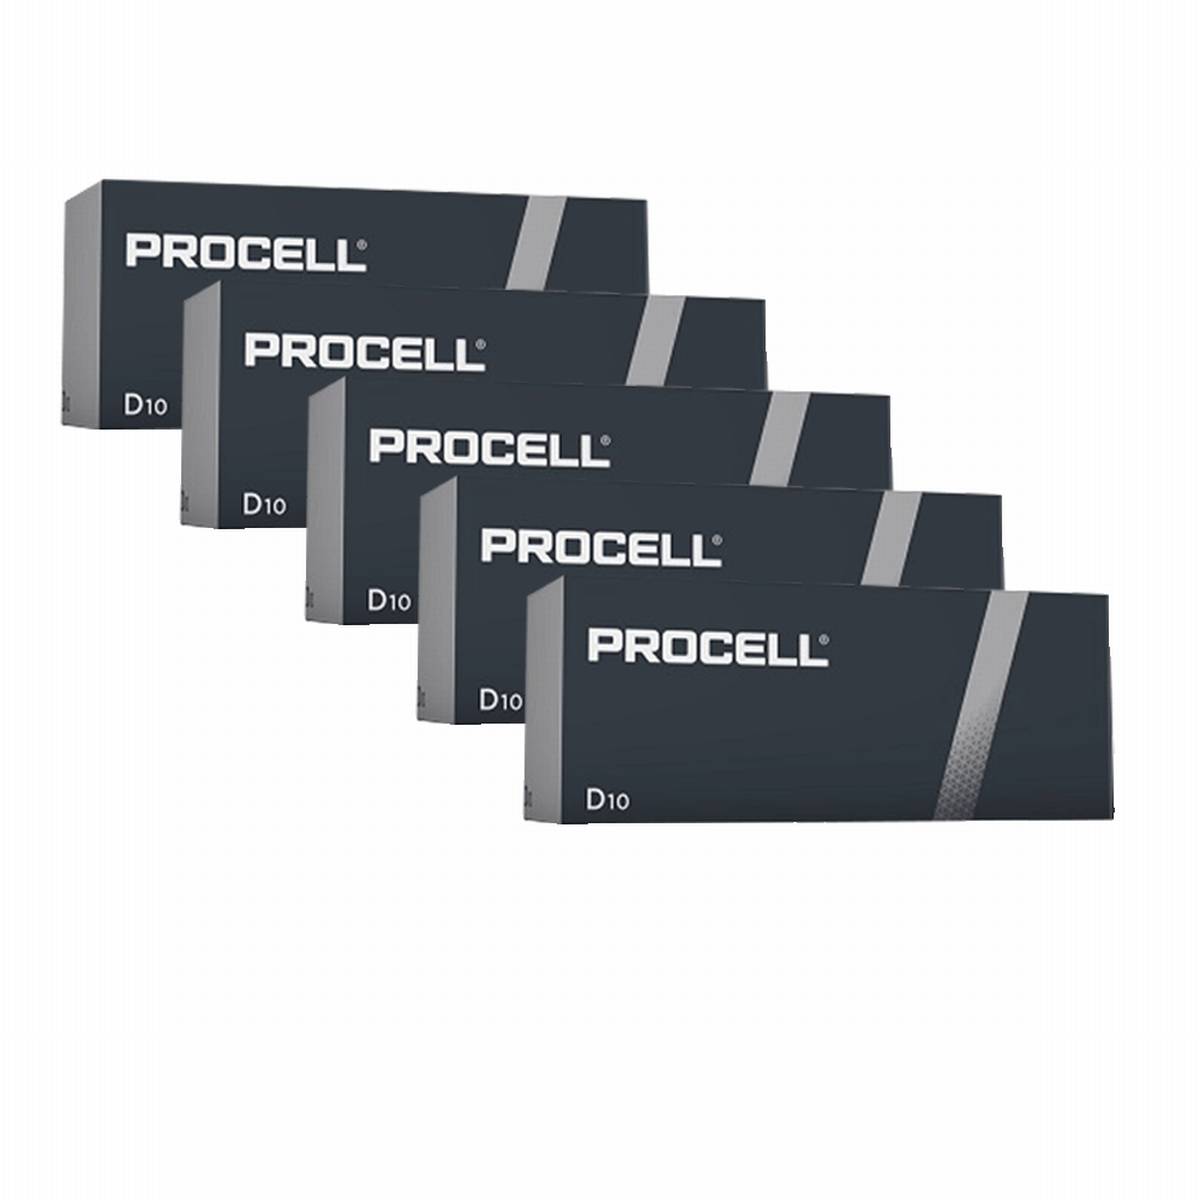 Duracell Procell Alkaline LR20 Mono D Batteria MN 1300 1.5V 50 pz. (scatola)